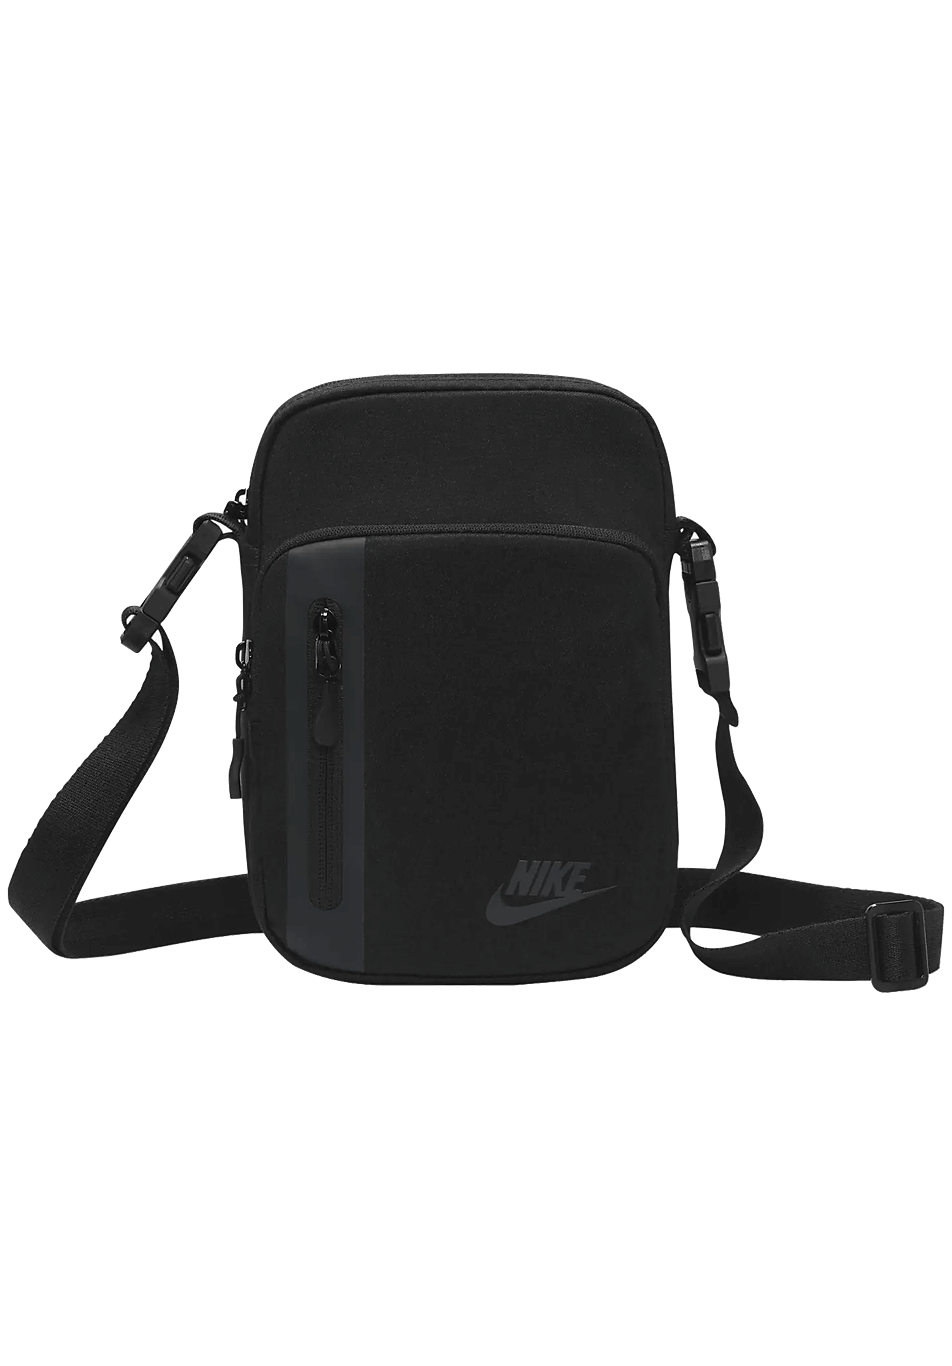 Nike SB Premium Cross Body Bag Black